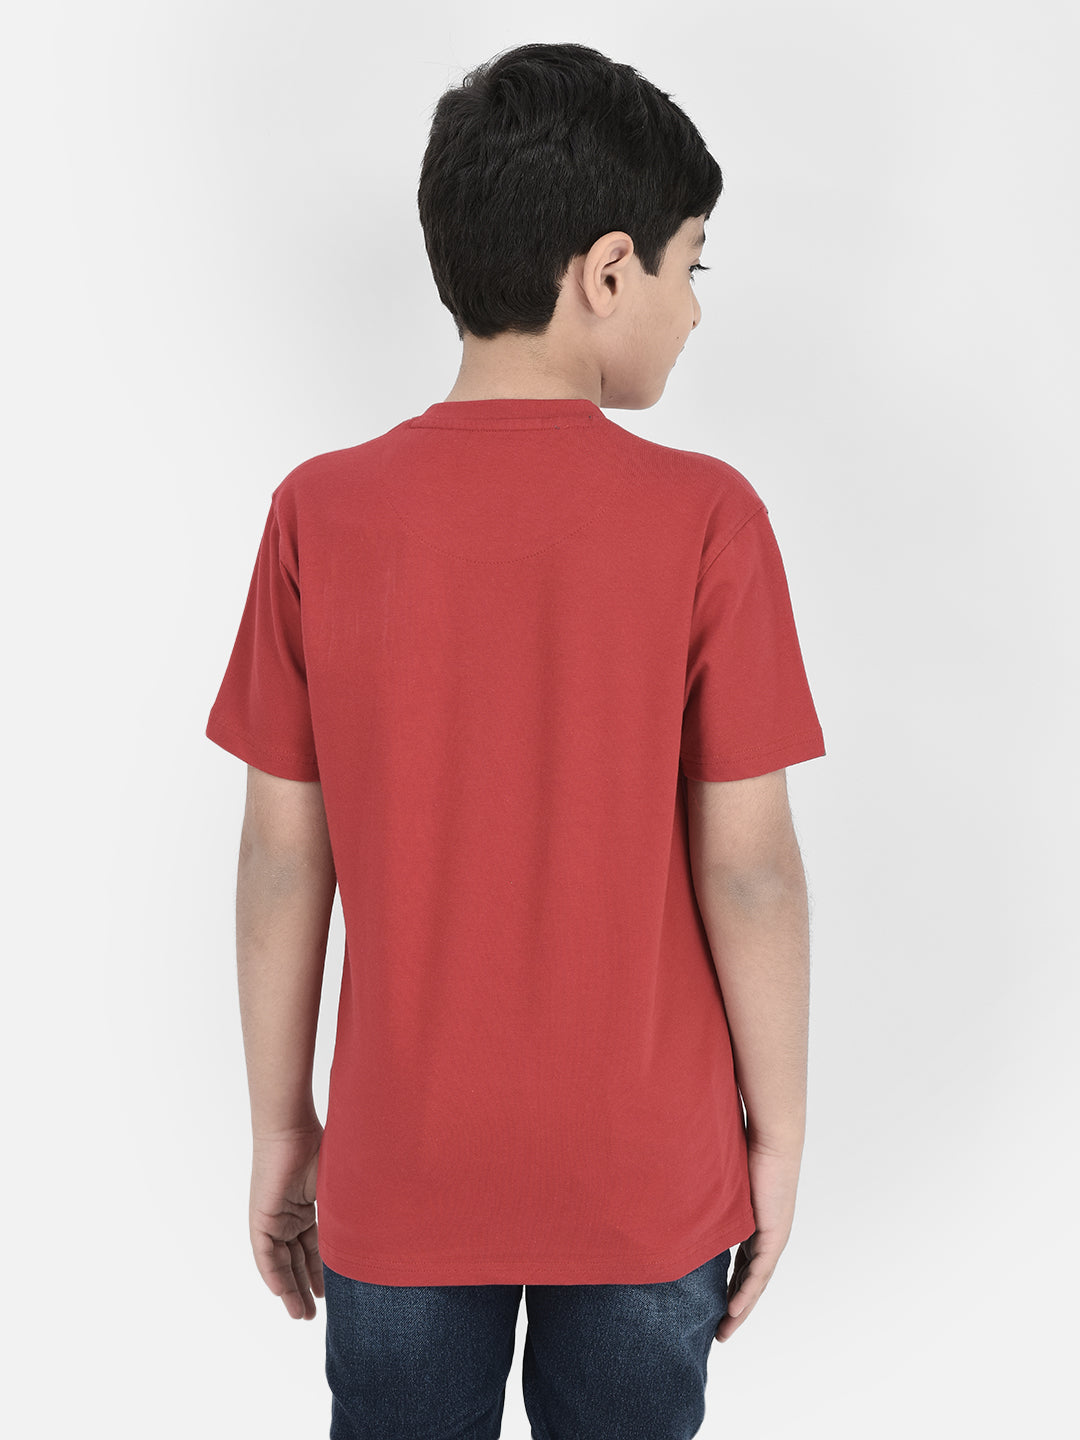  Red Printed Round Neck T-shirt